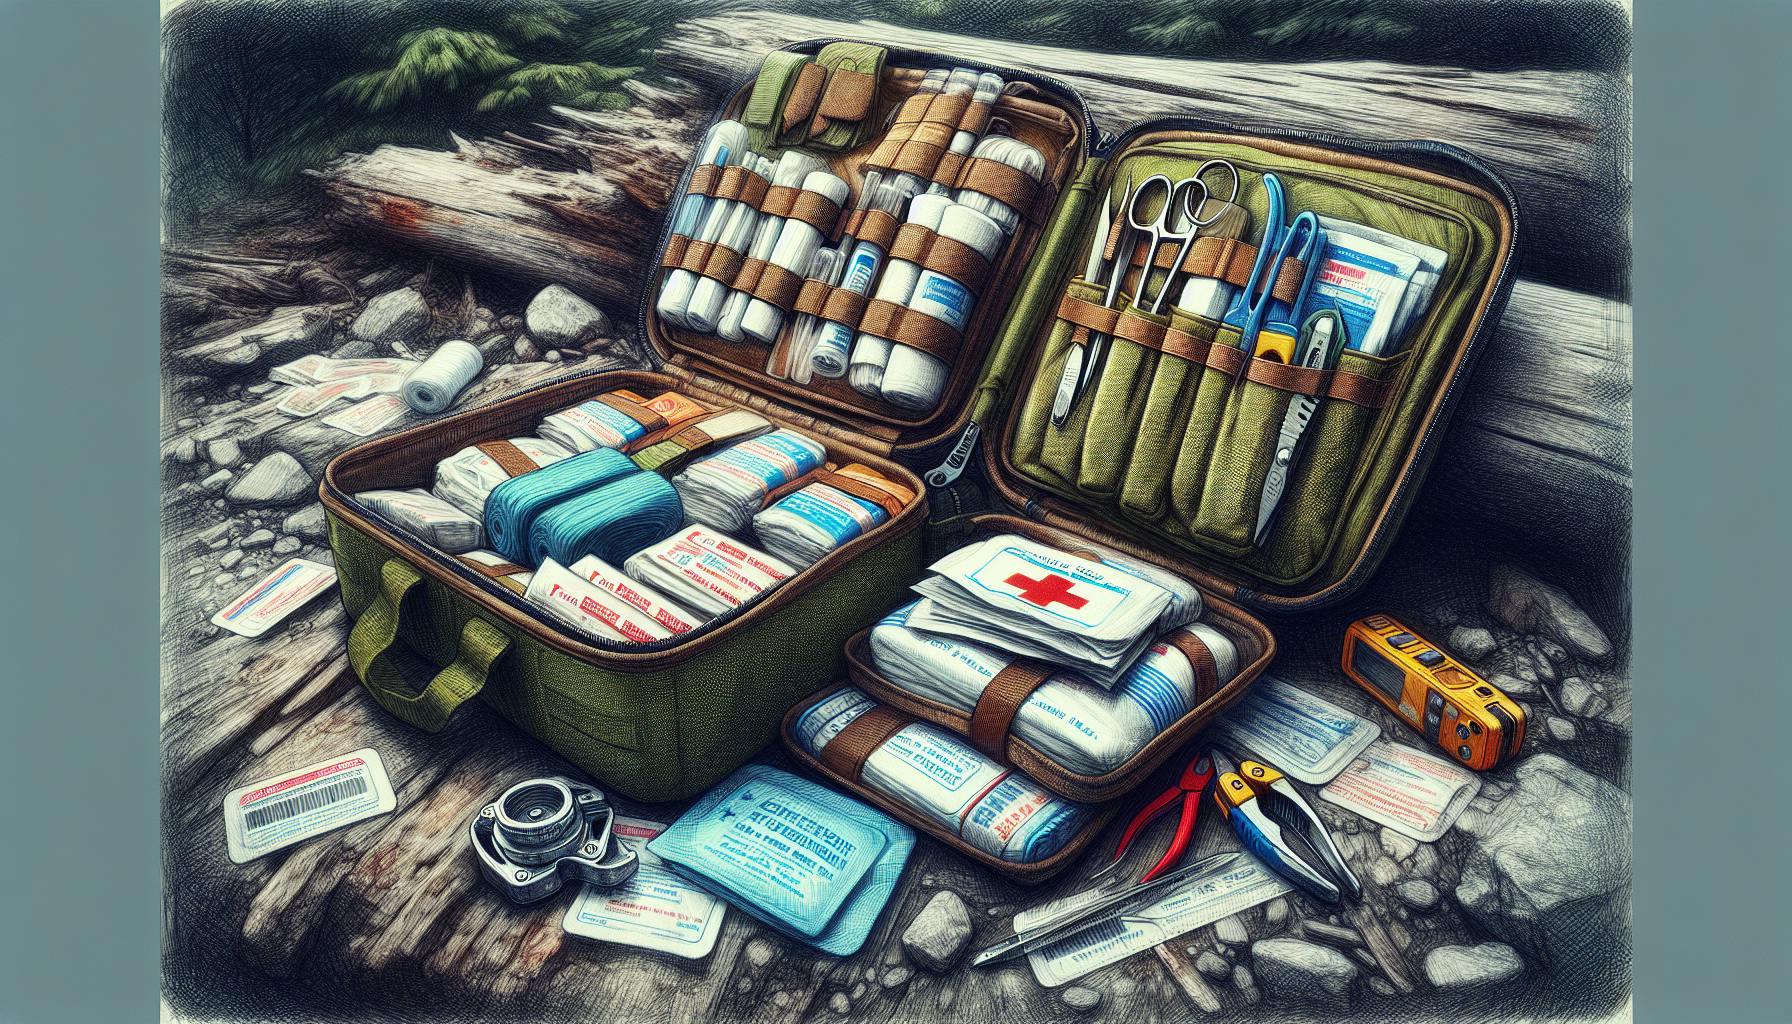 Survival 1st Aid Kit Essentials